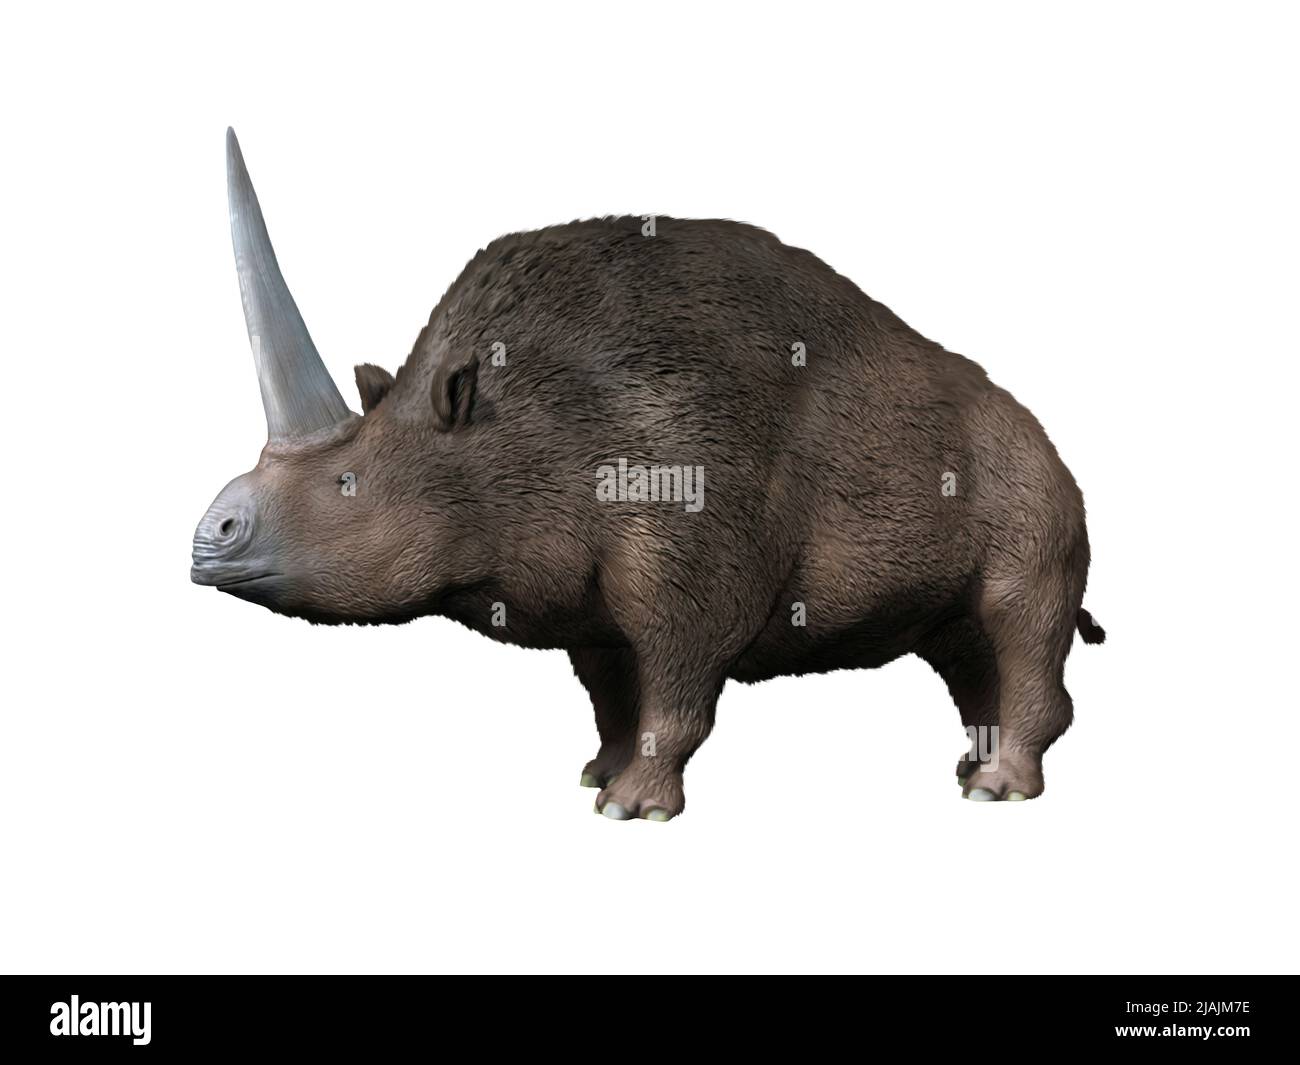 Elasmotherium sibiricum, a rhinoceros from the Pleistocene epoch of Siberia. Stock Photo